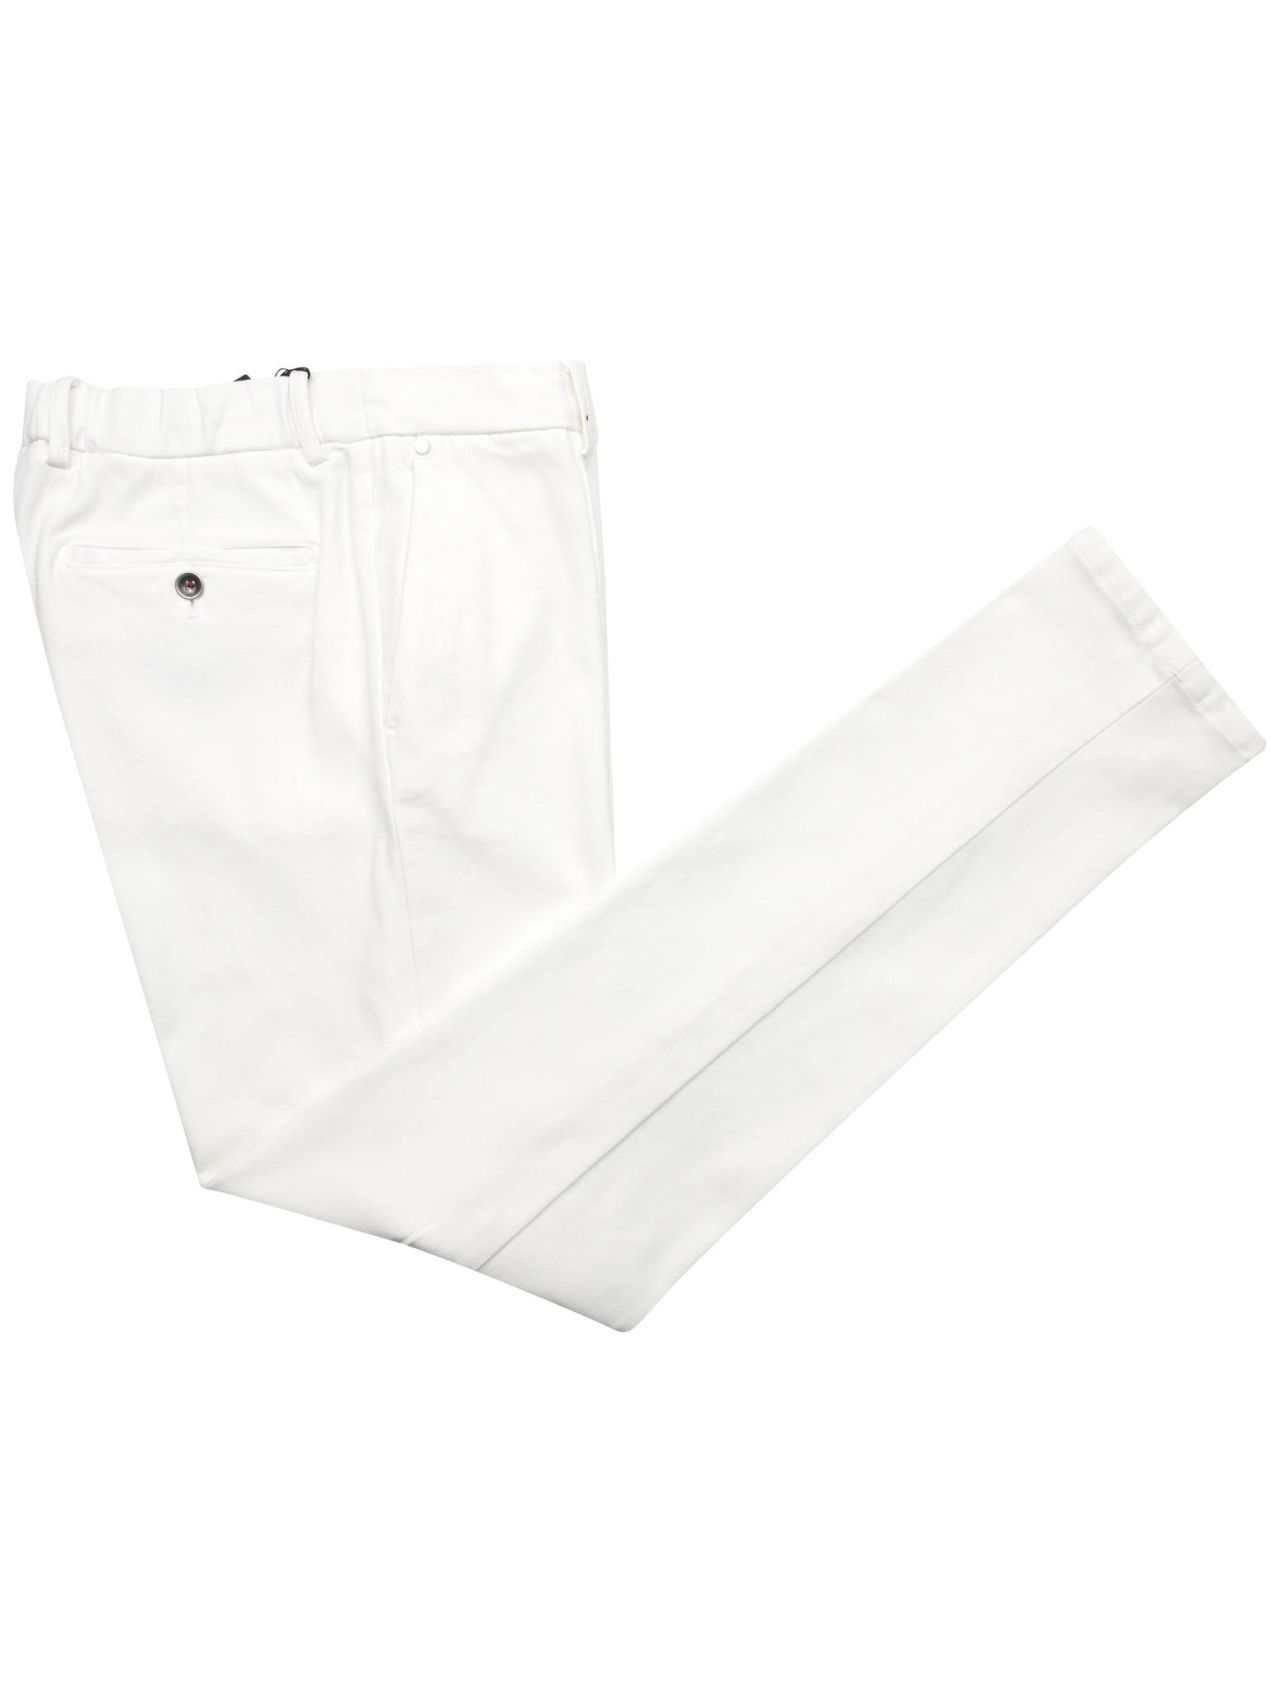 Cream White Cotton Buttoned Pants DICKENS. Undyed Cotton Trousers Linen  Womens Clothing Drop Crotch Victorian Vintage Antique Avant Garde - Etsy